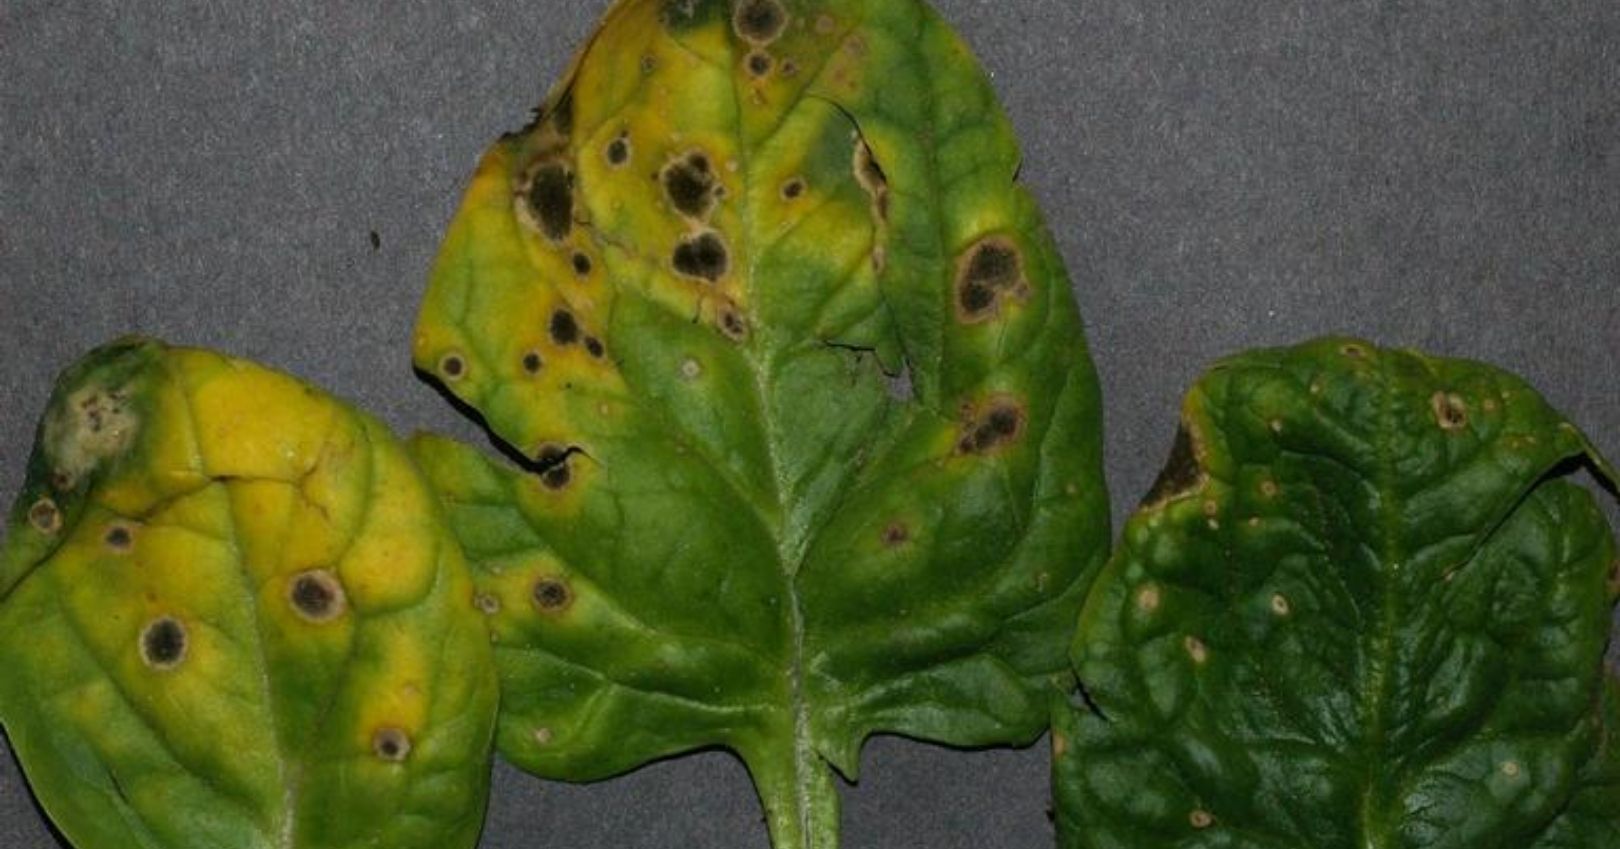 Cladosporium Leaf Spot on Spinach